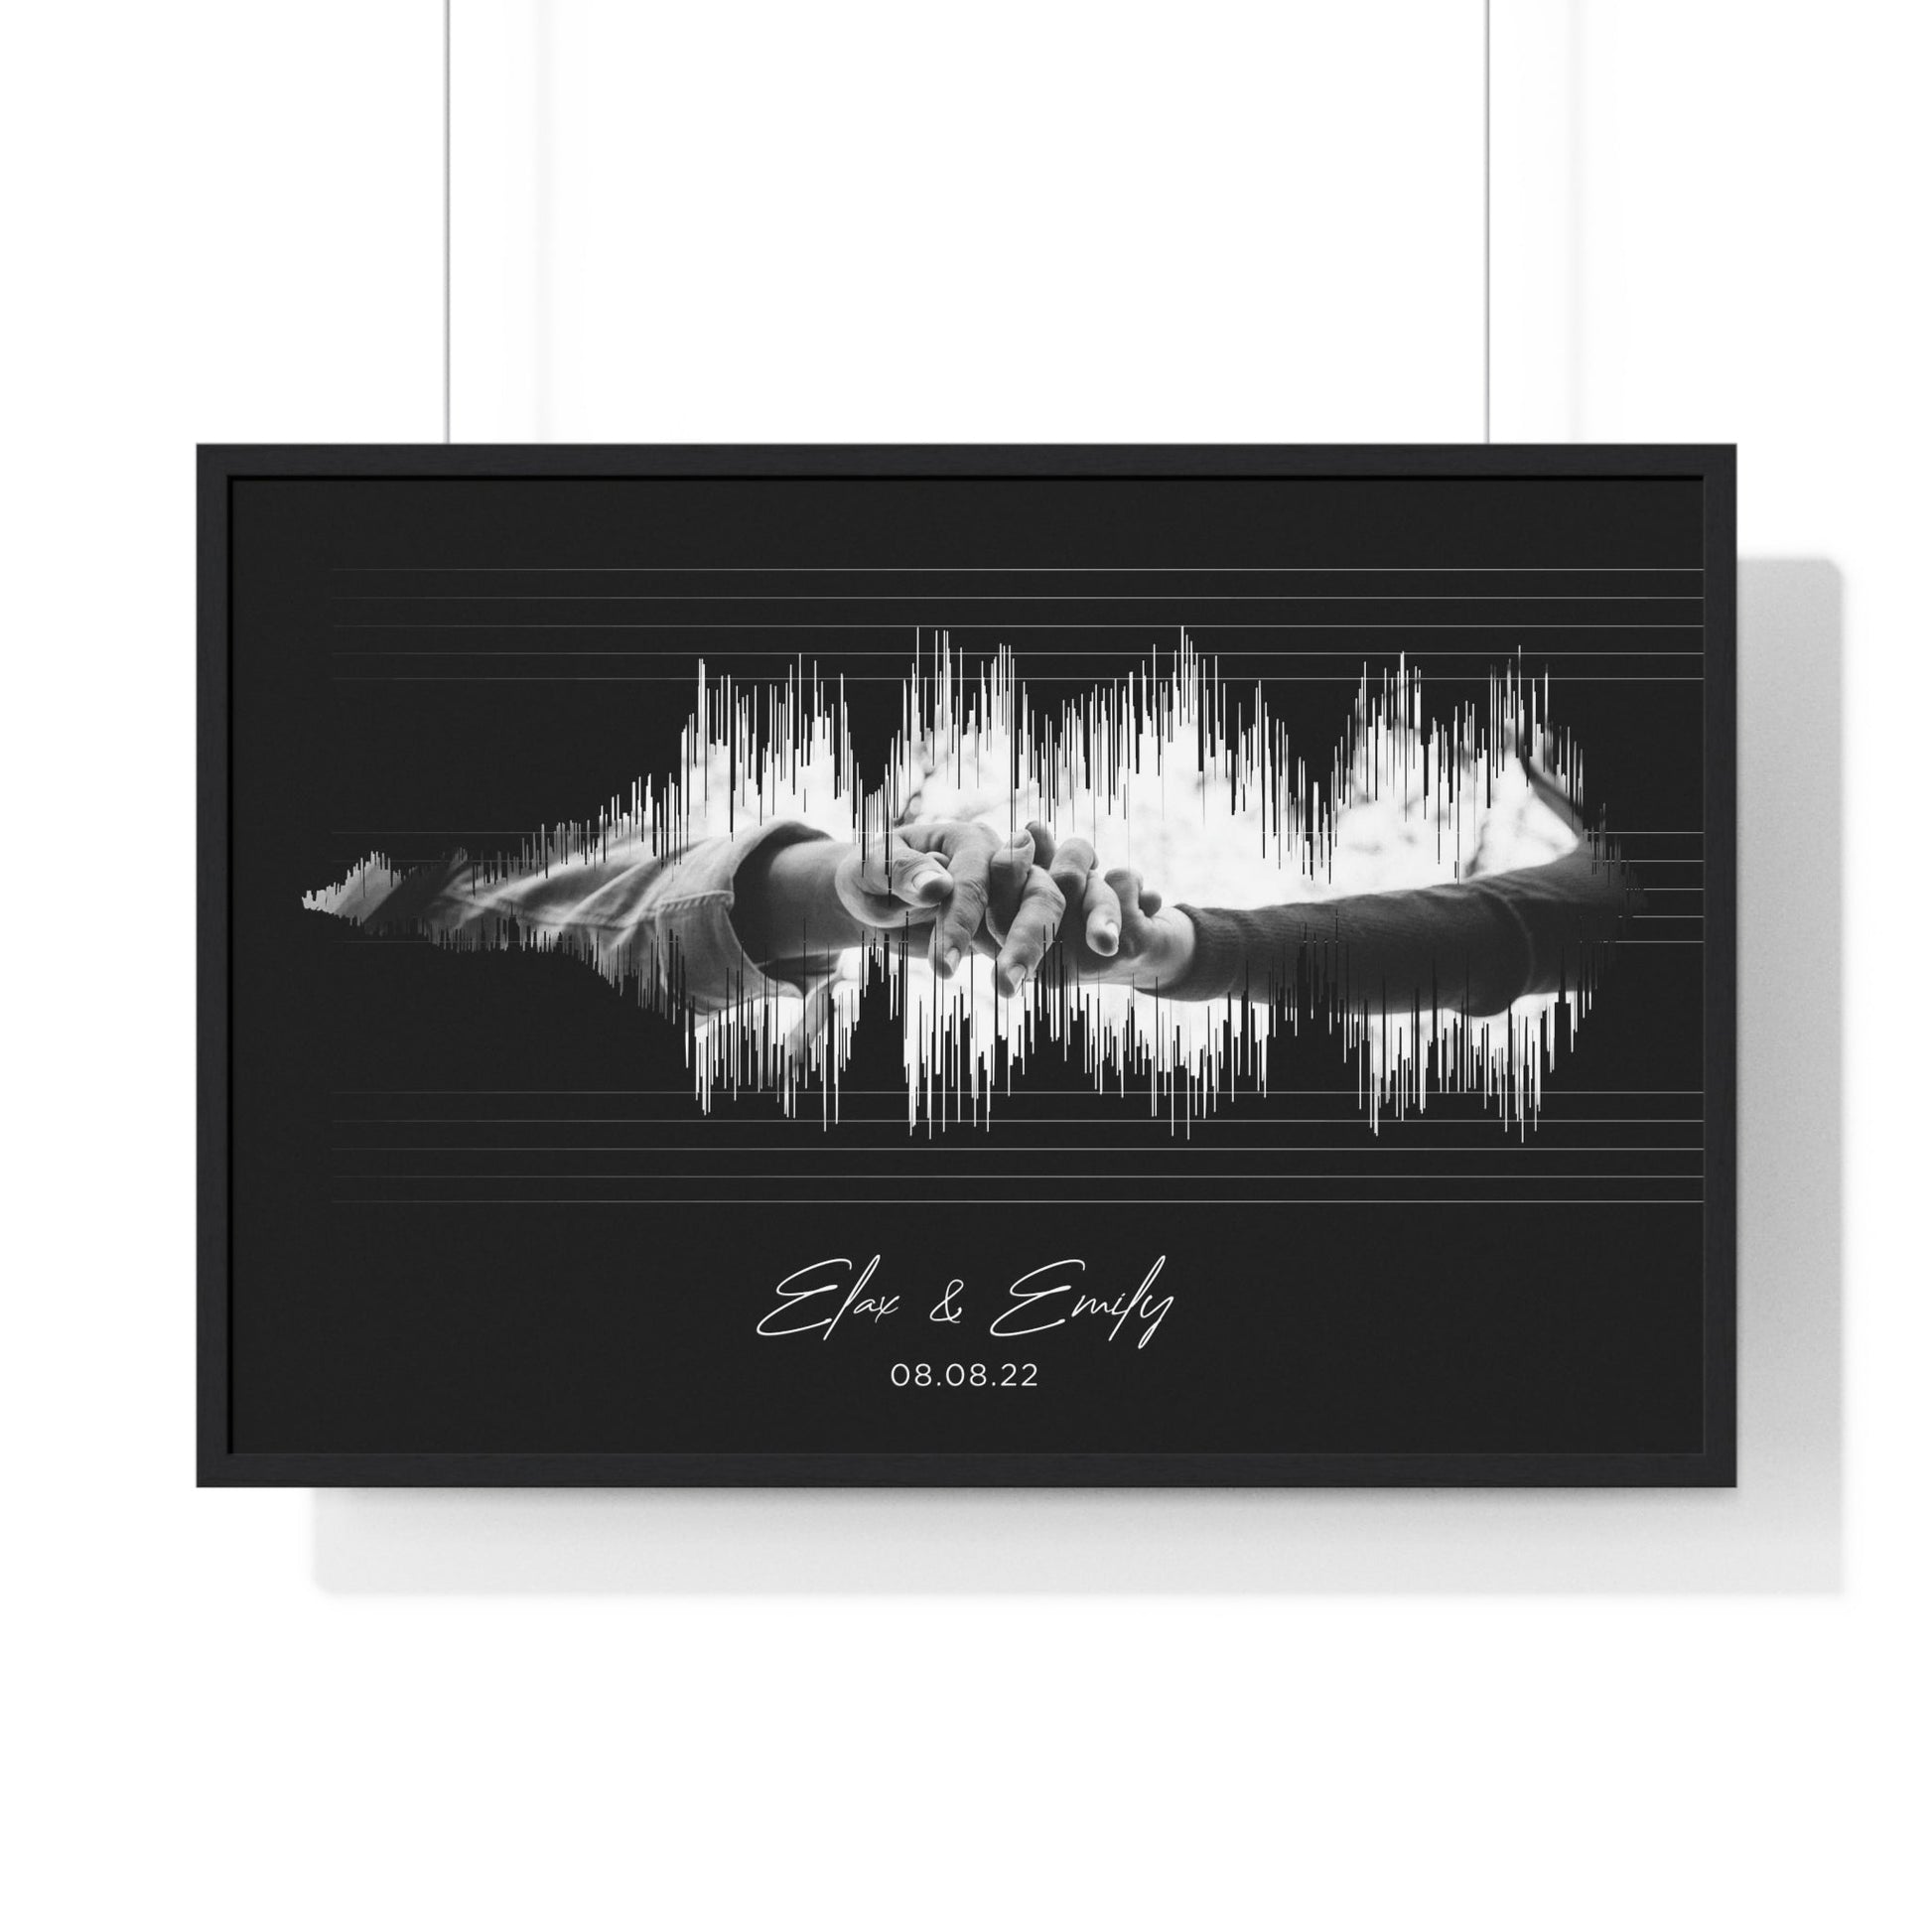  soundwave art print on canvas, framed for wall decor.